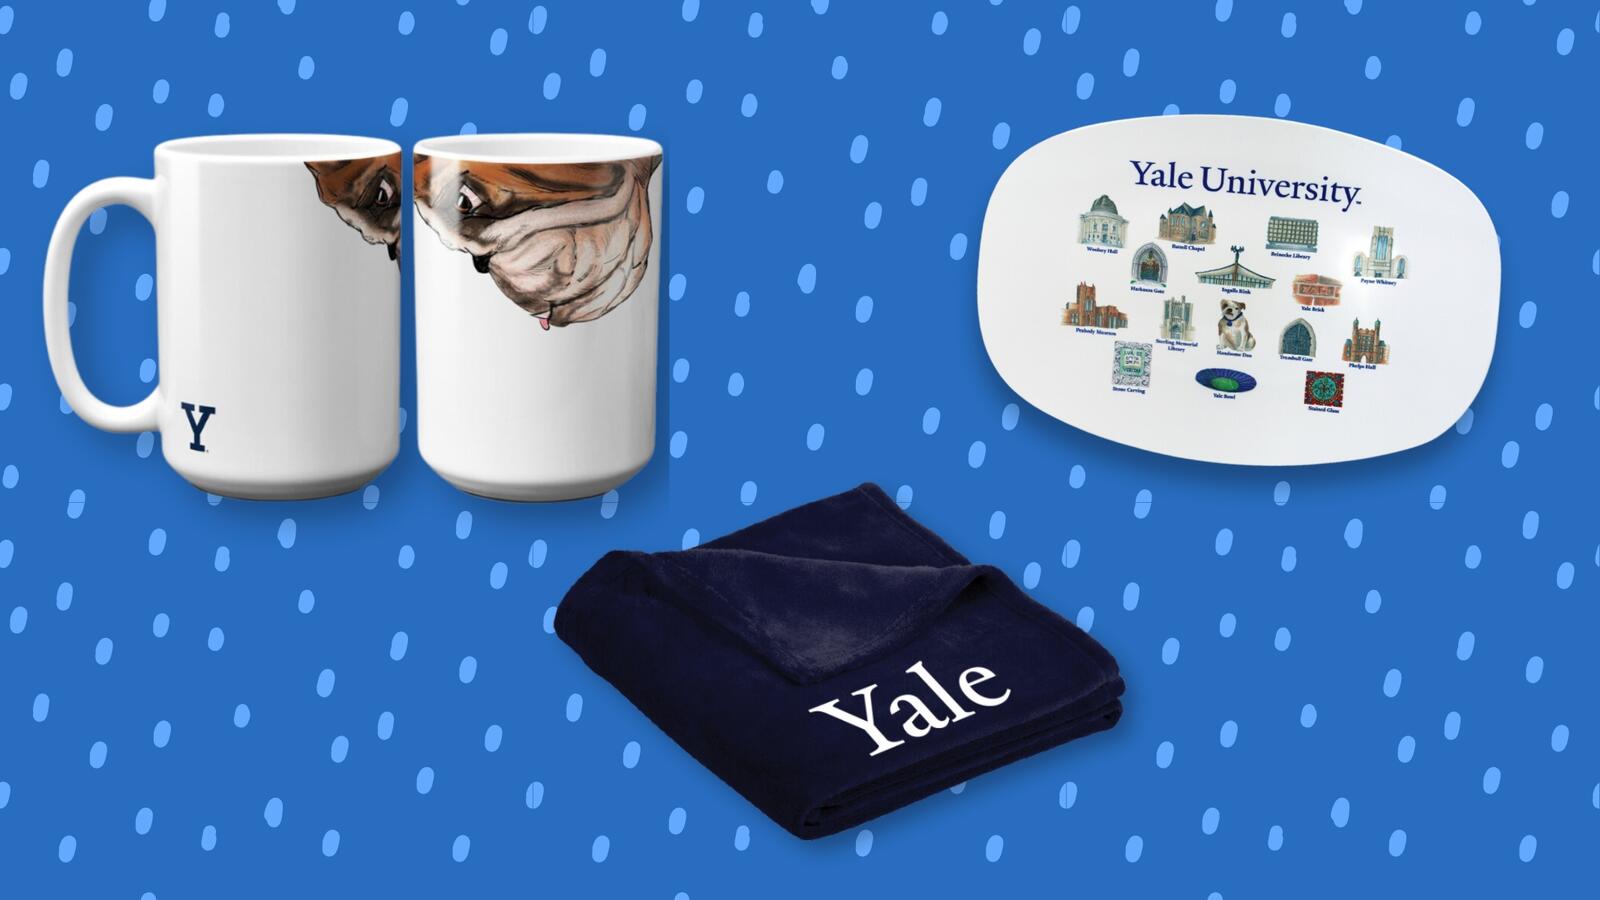 Yale University College Logo Pullover Hoodie